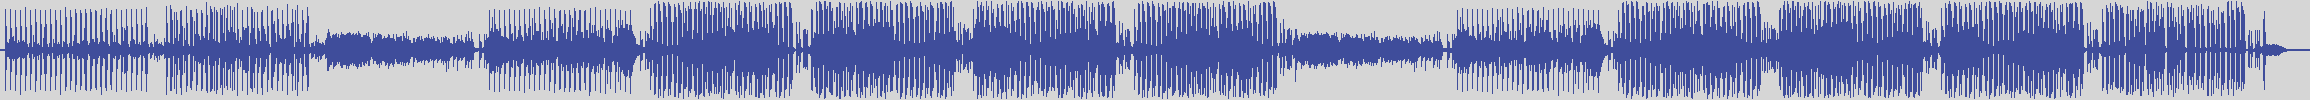 nf_boyz_records [NFY027] Blue Light - Never Gonna [Deep One Mix] audio wave form